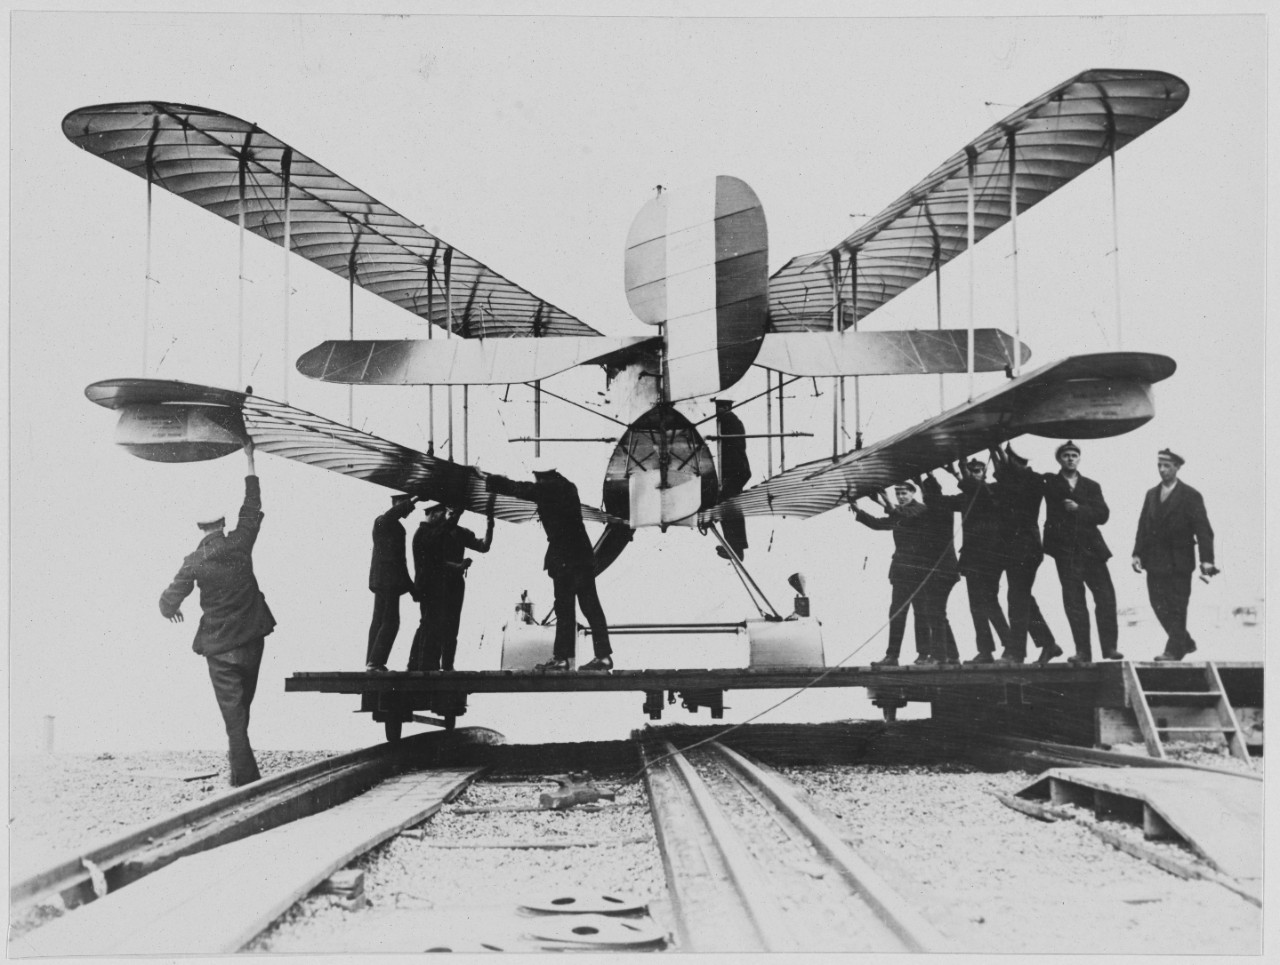 British seaplane being put away by men